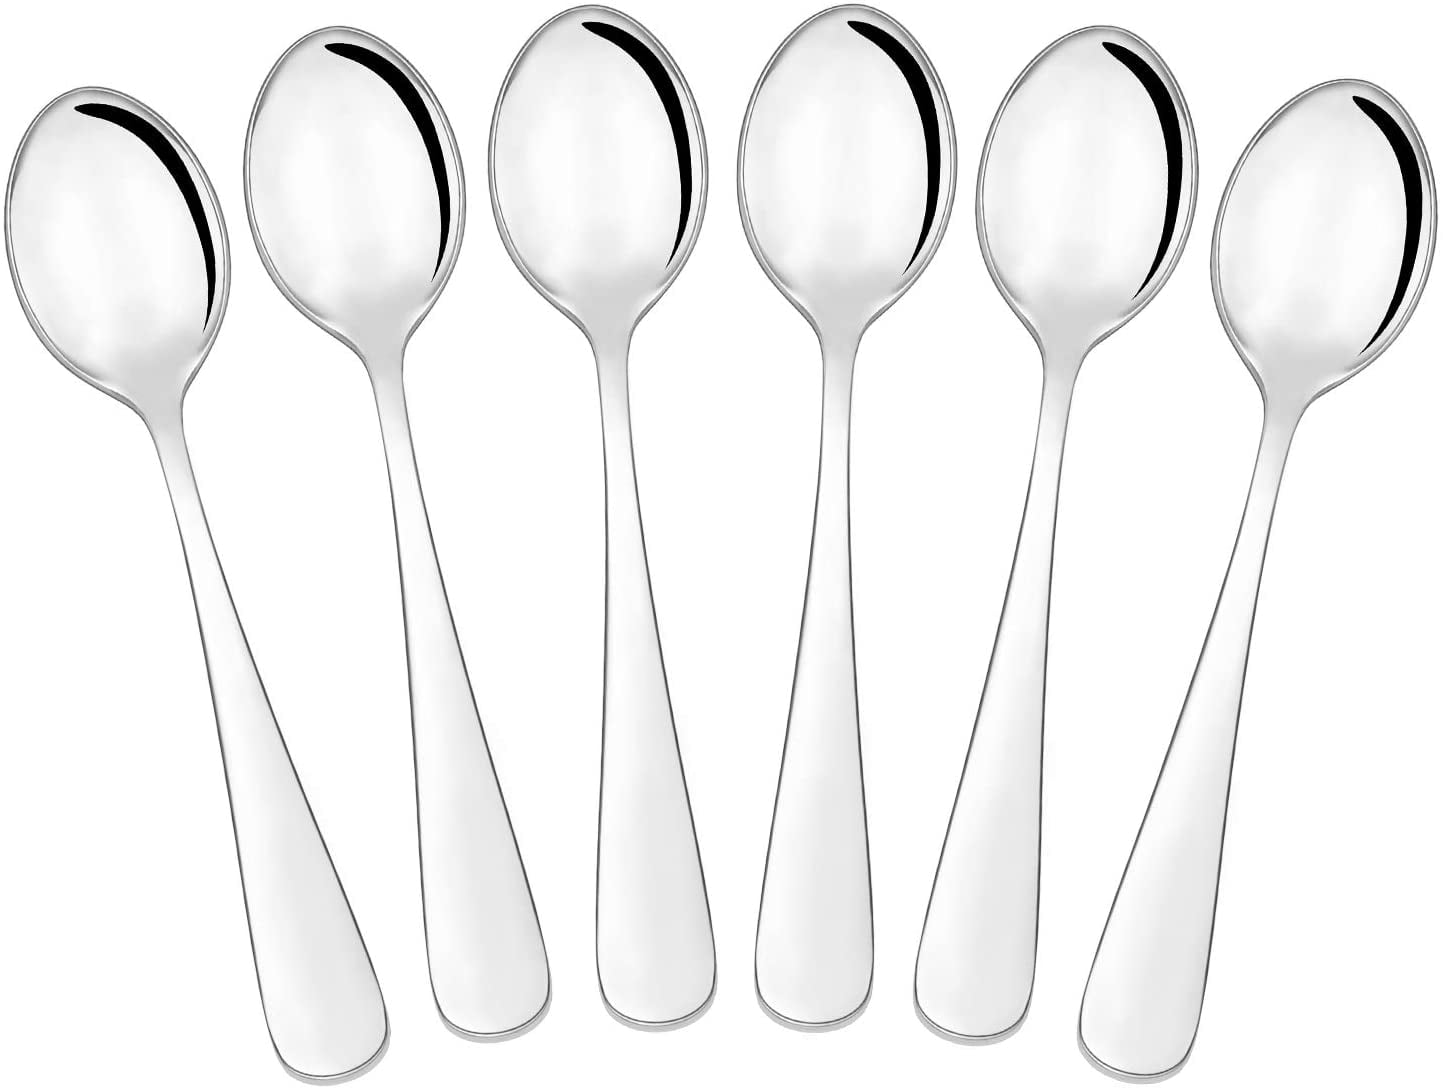 Utiao 12-Piece Coffee Spoon Black Stainless Steel Demitasse Espresso Spoons